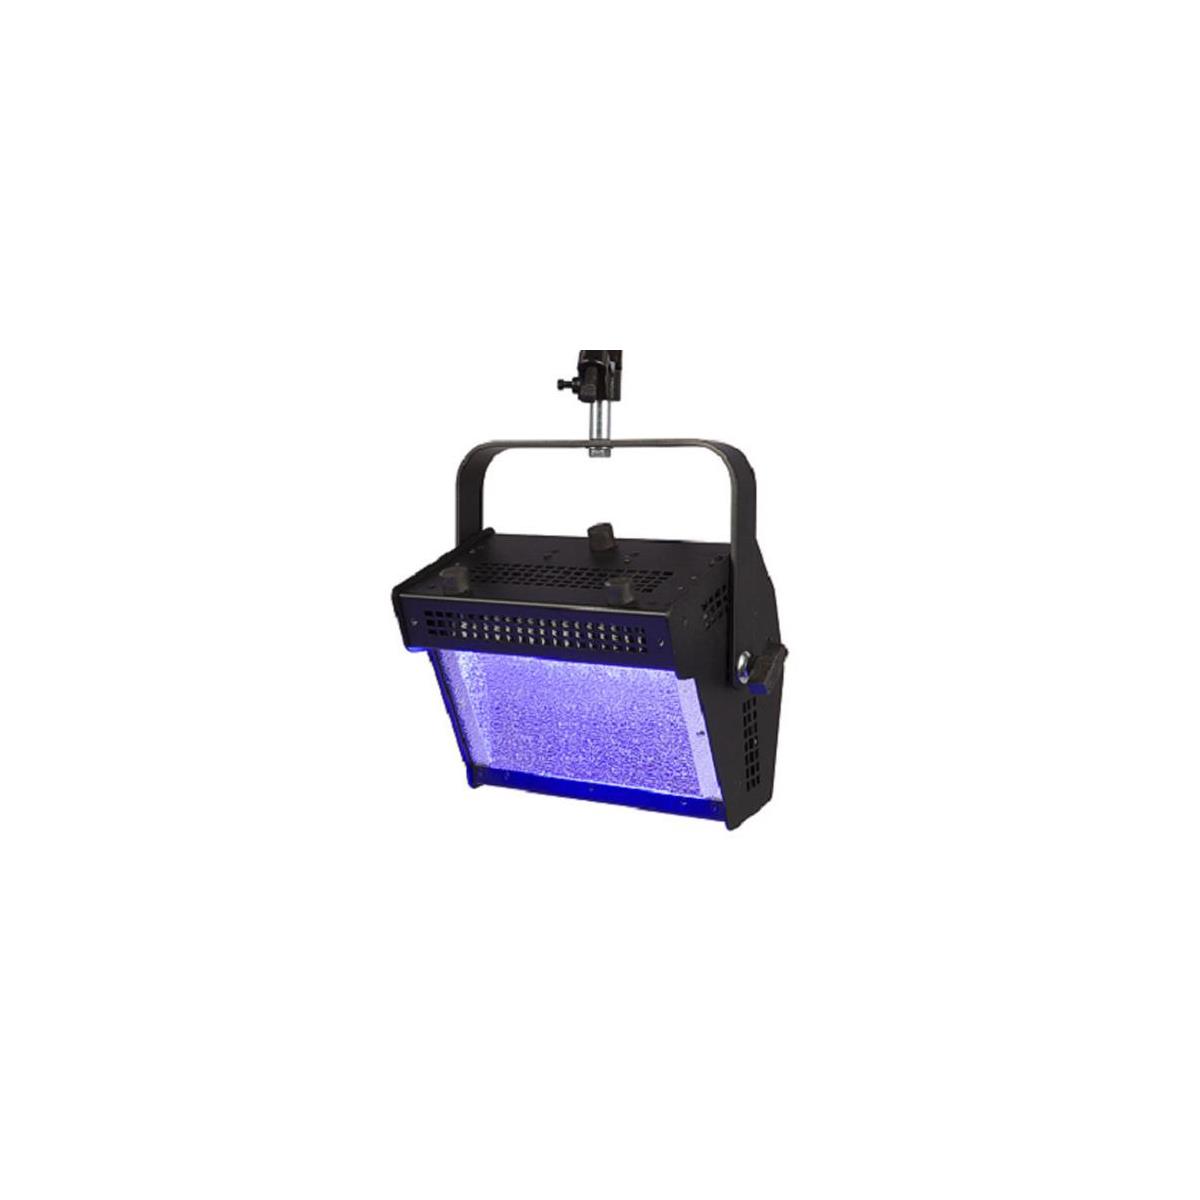 

Alesis Altman Spectra Cyc 100 100W RGBW LED Luminaire Wash Light, 4856 Lumens, Black